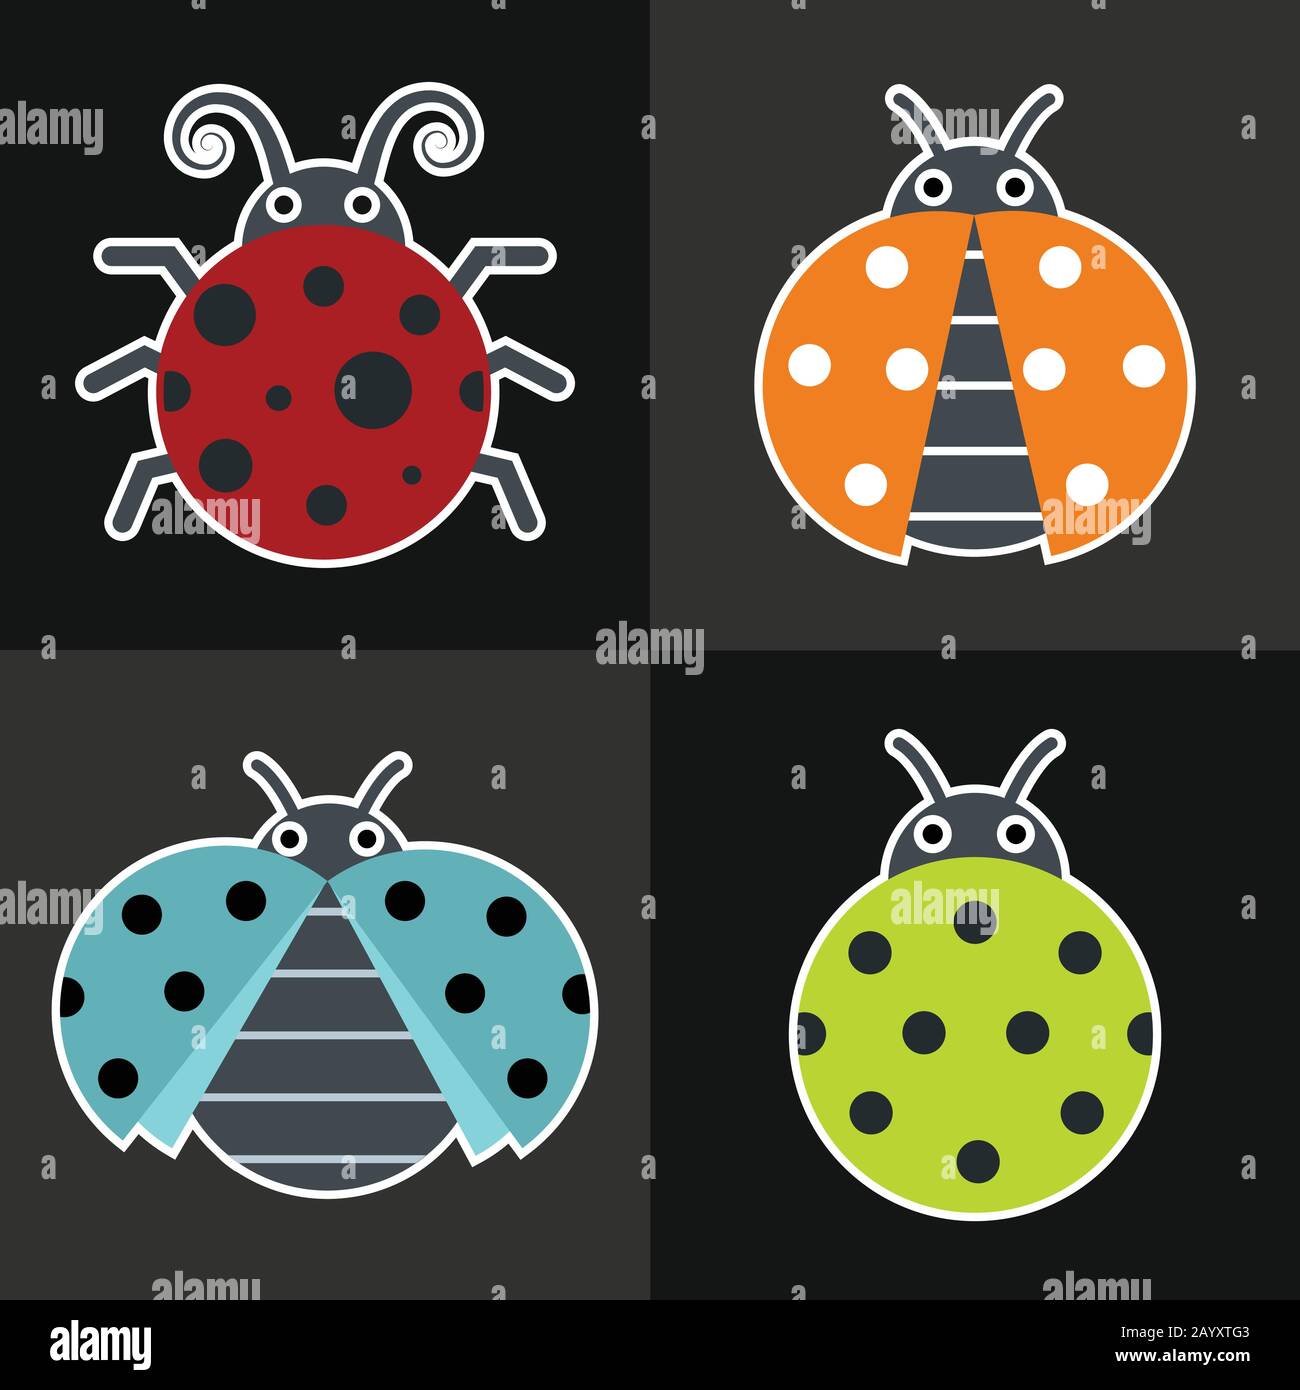 Ladybug-Symbole auf schwarzem Hintergrund. Ladybug mit Farbflügeln. Vektorgrafiken Stock Vektor